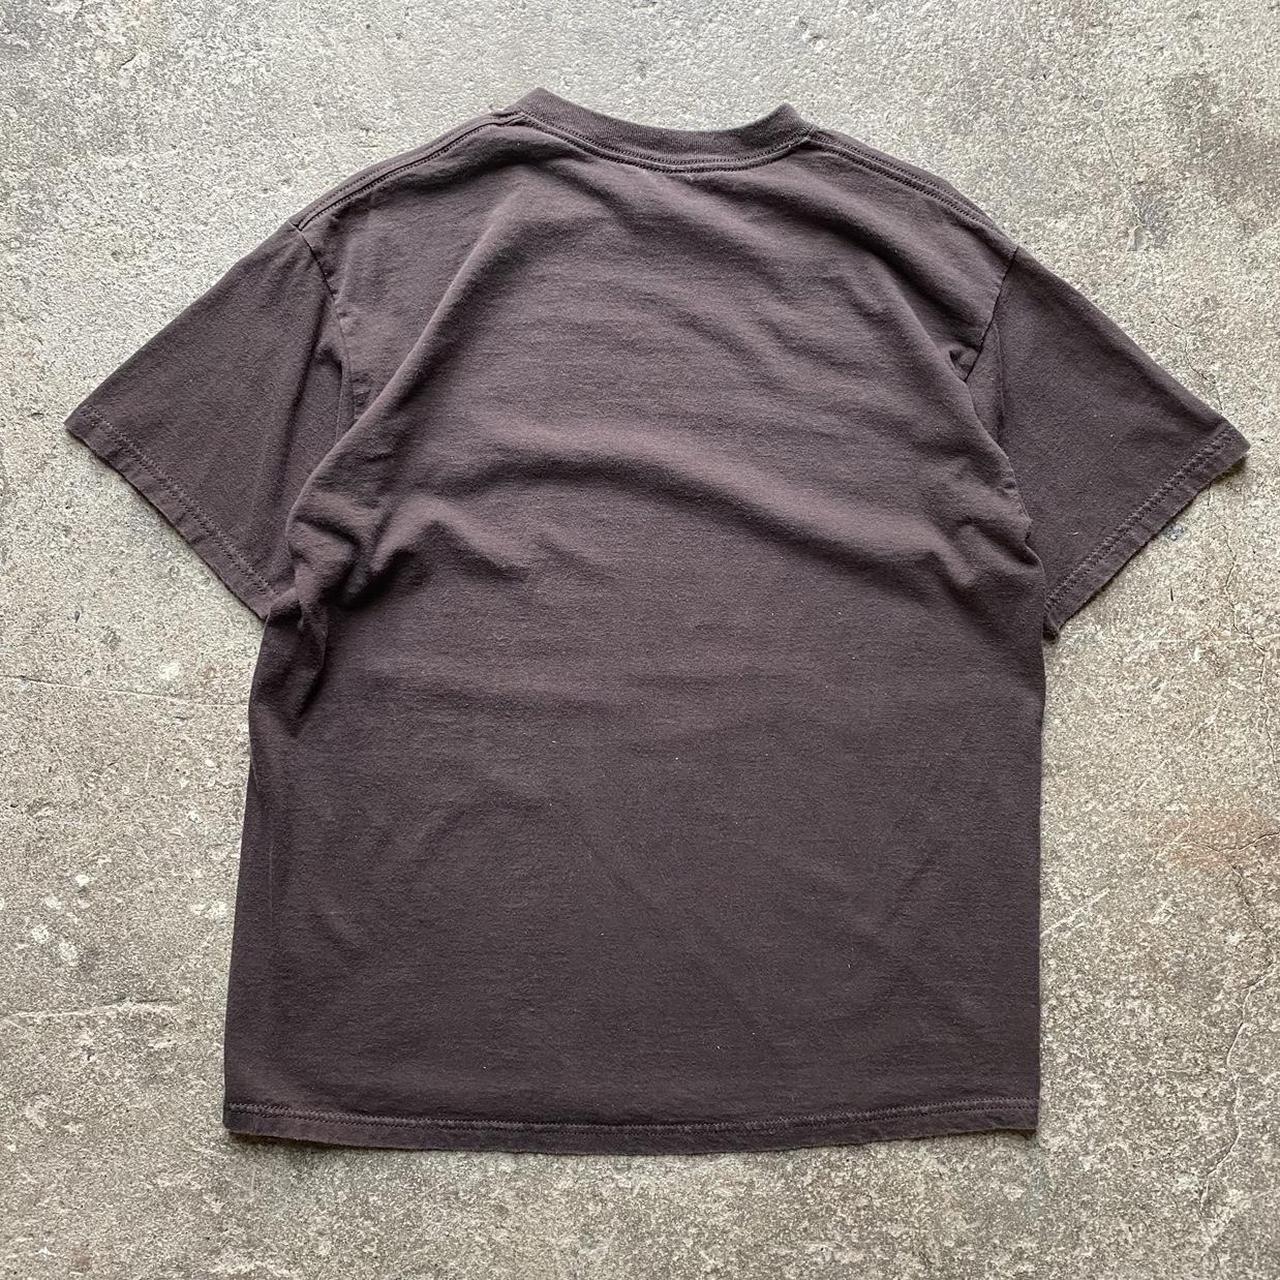 American Vintage Men's Brown and Cream T-shirt | Depop